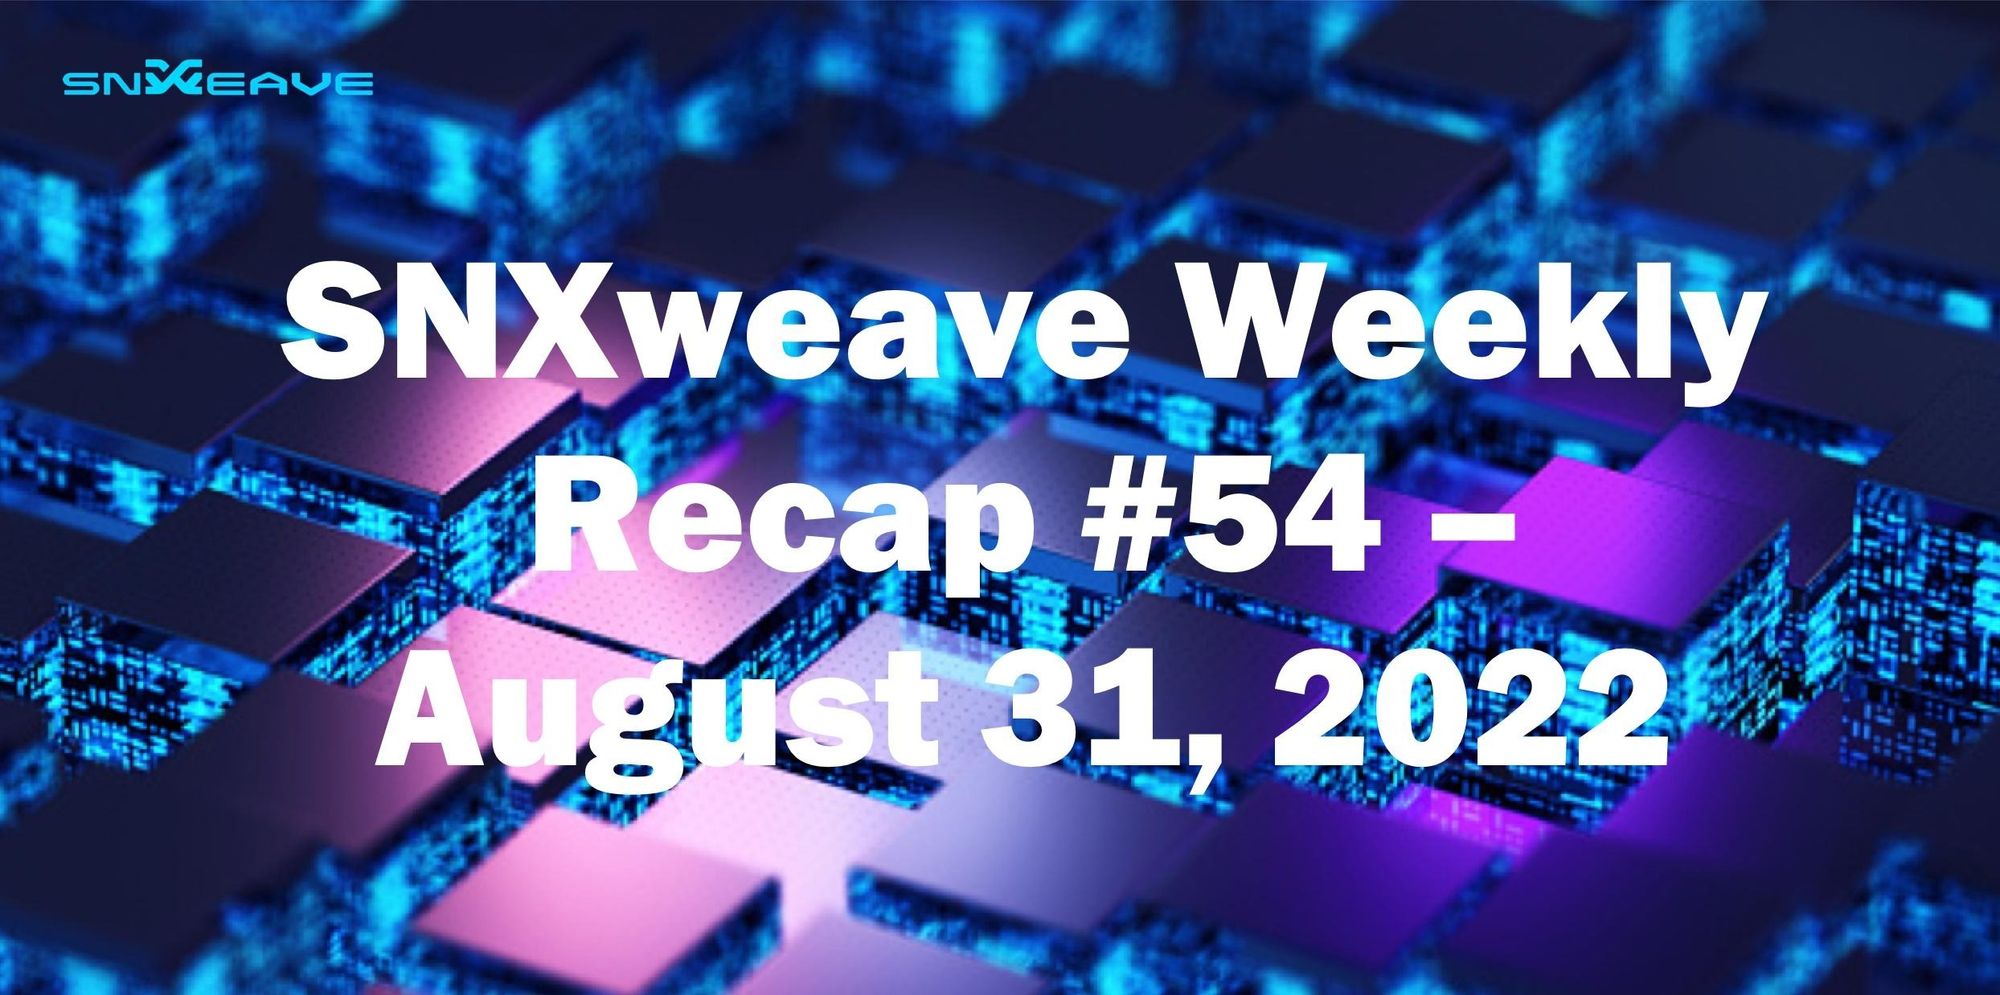 SNXweave Weekly Recap 54